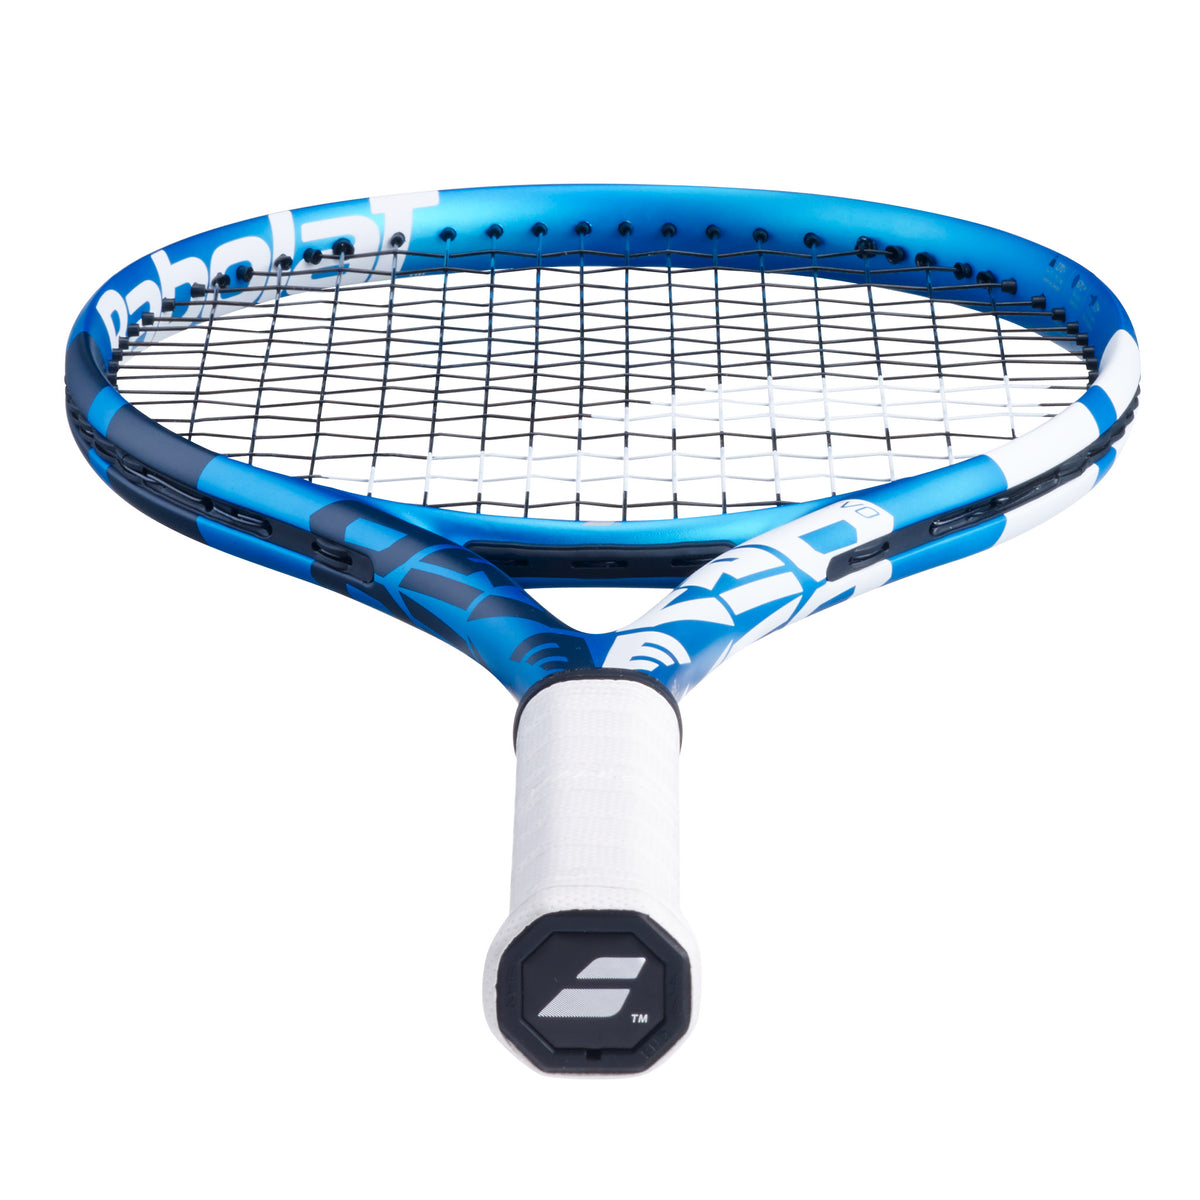 Babolat EVO Drive Tennis Racket